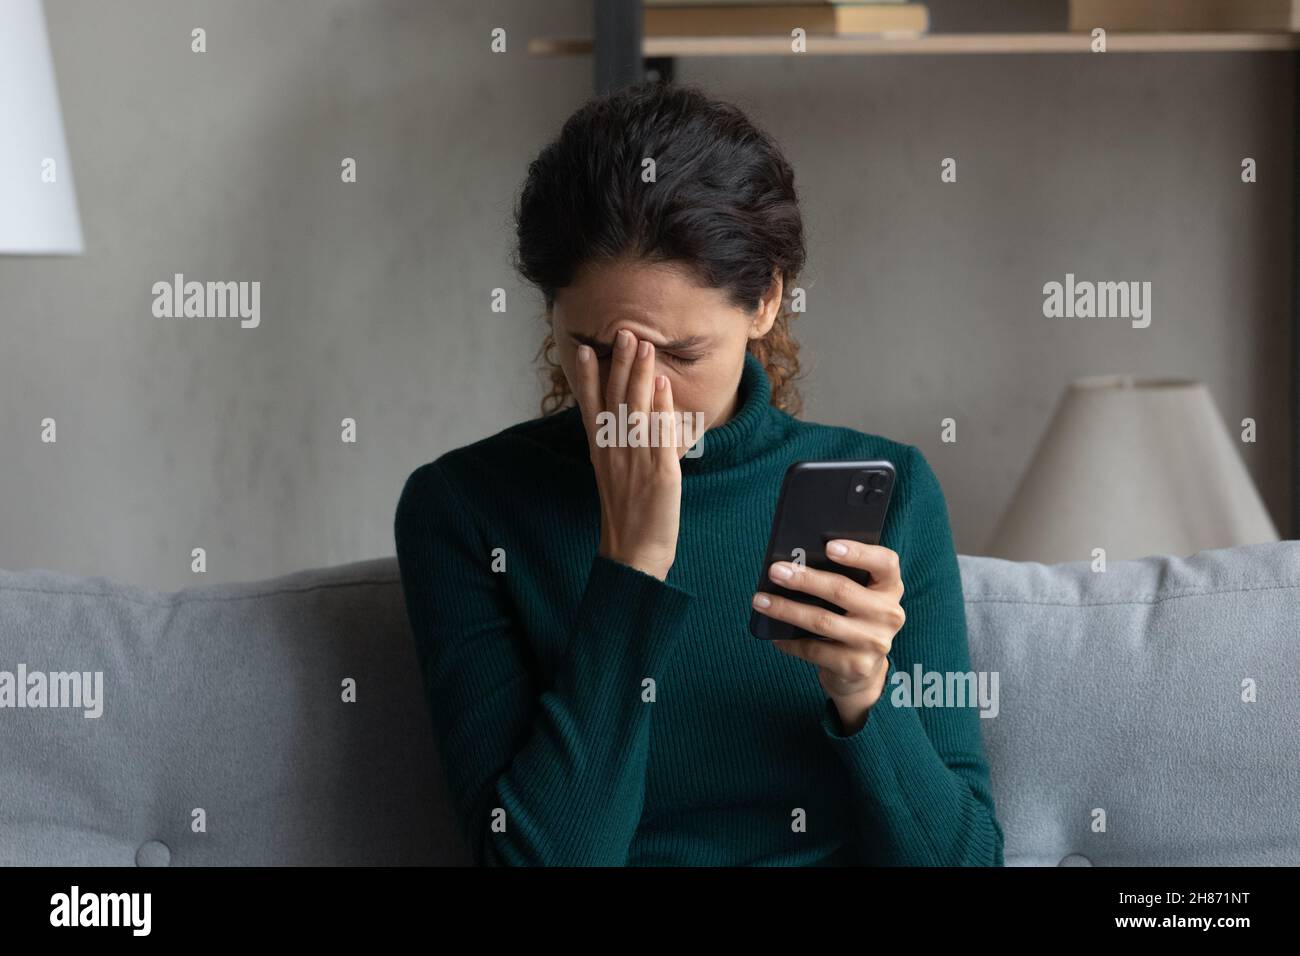 Desperate millennial woman get phone message about dismissal from job Stock Photo